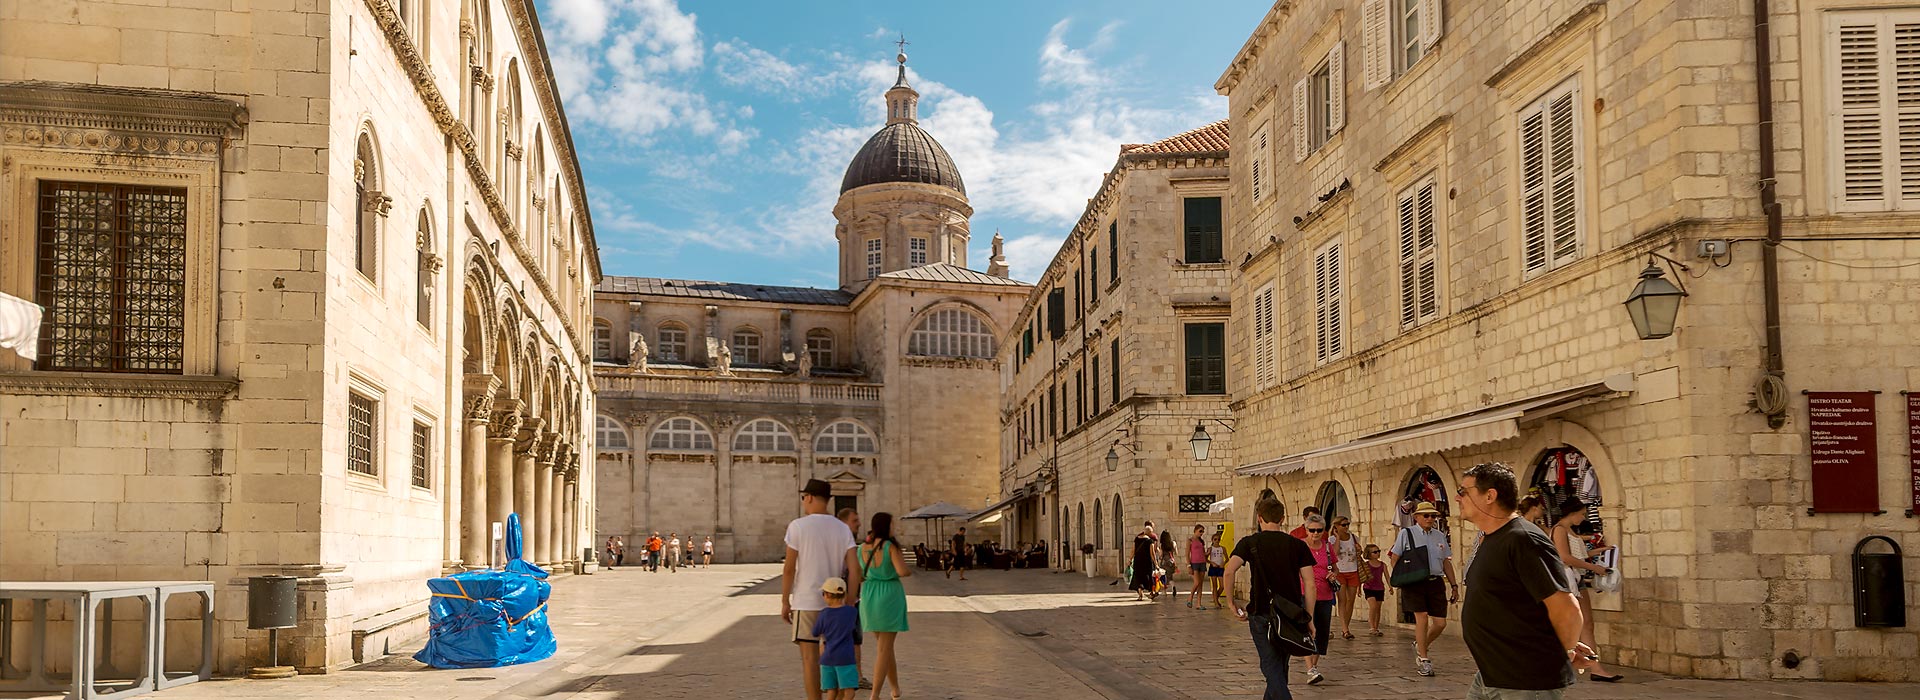 Excursion to Dubrovnik